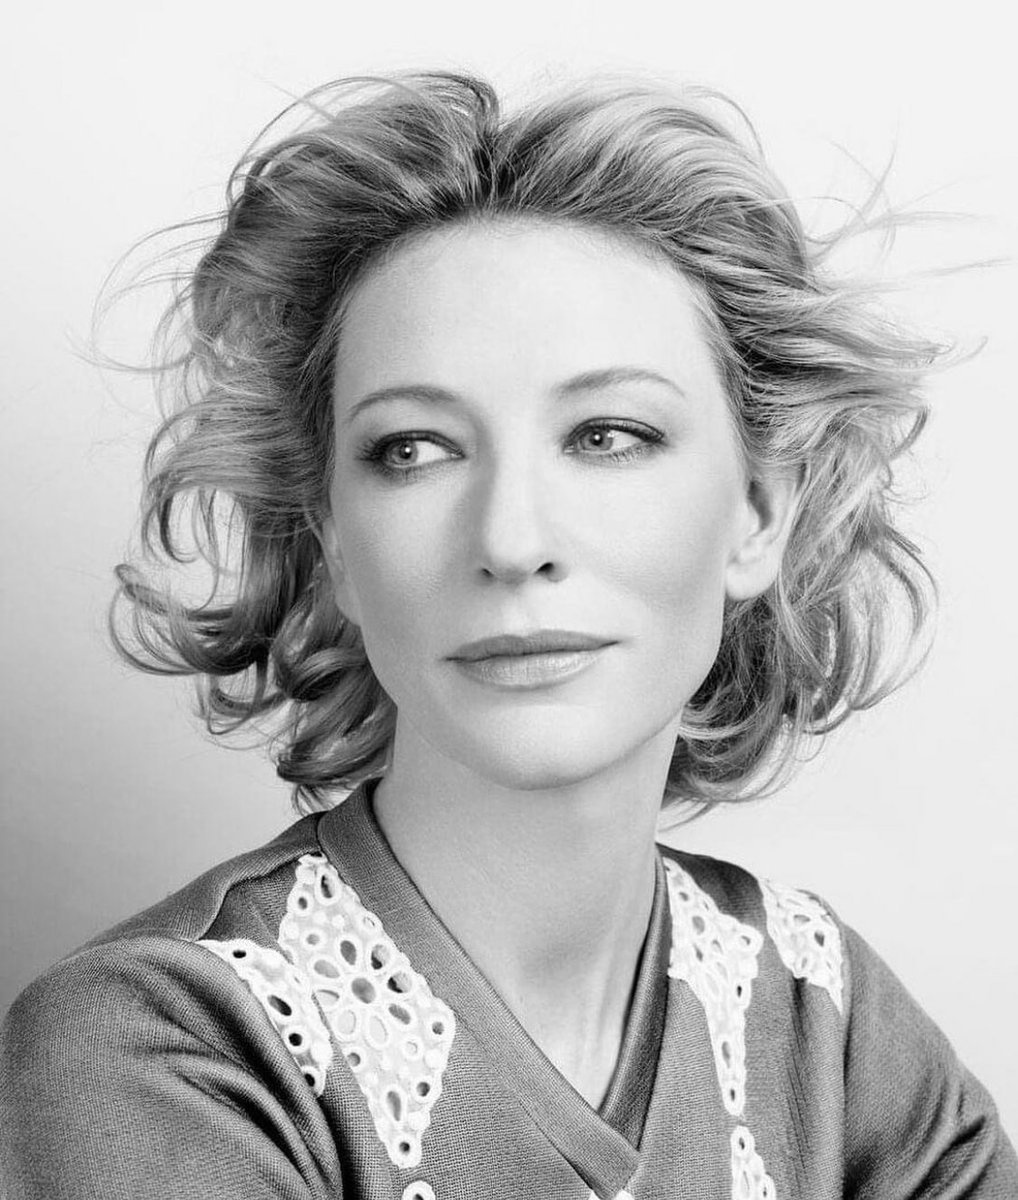 Warwick Thornton’s ‘THE NEW BOY’ starring Cate Blanchett will premiere at the Cannes Film Festival #UnCertainRegard.

Set in 1940s Australia.